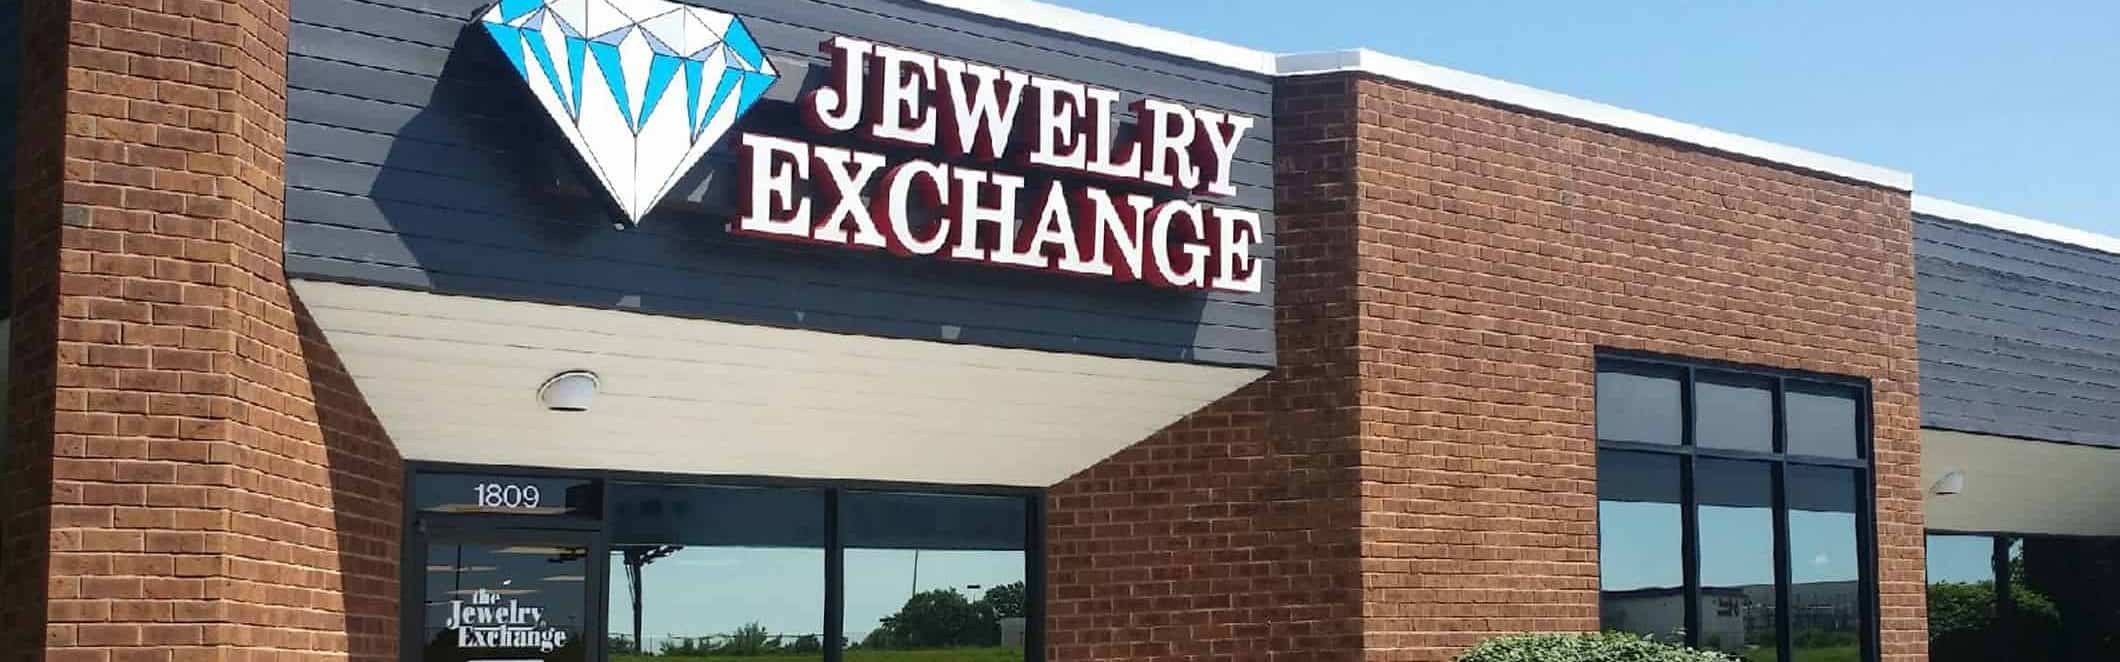 St. Louis – Jewelry Exchange